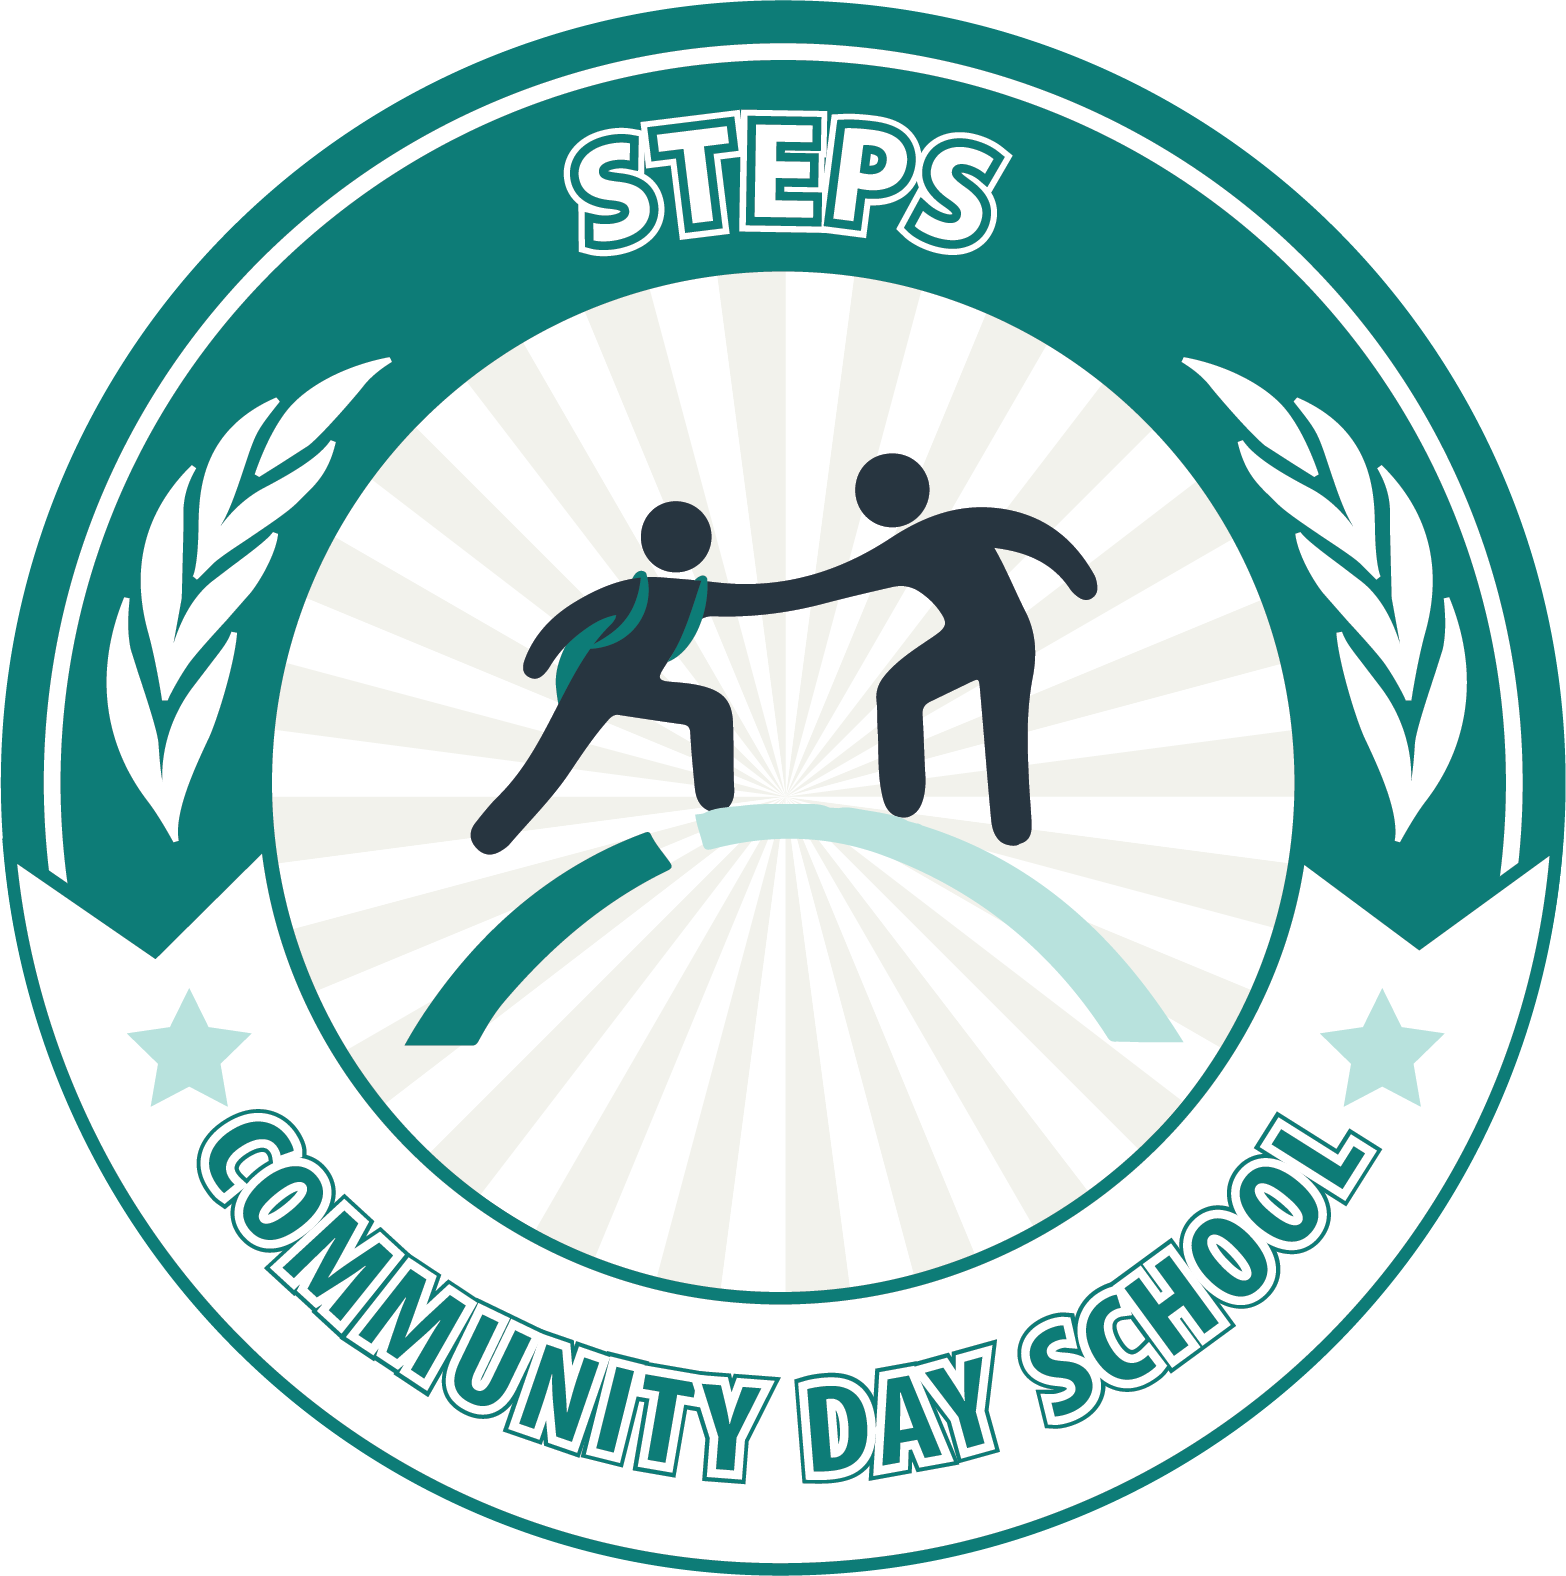 STEPS Community Day School